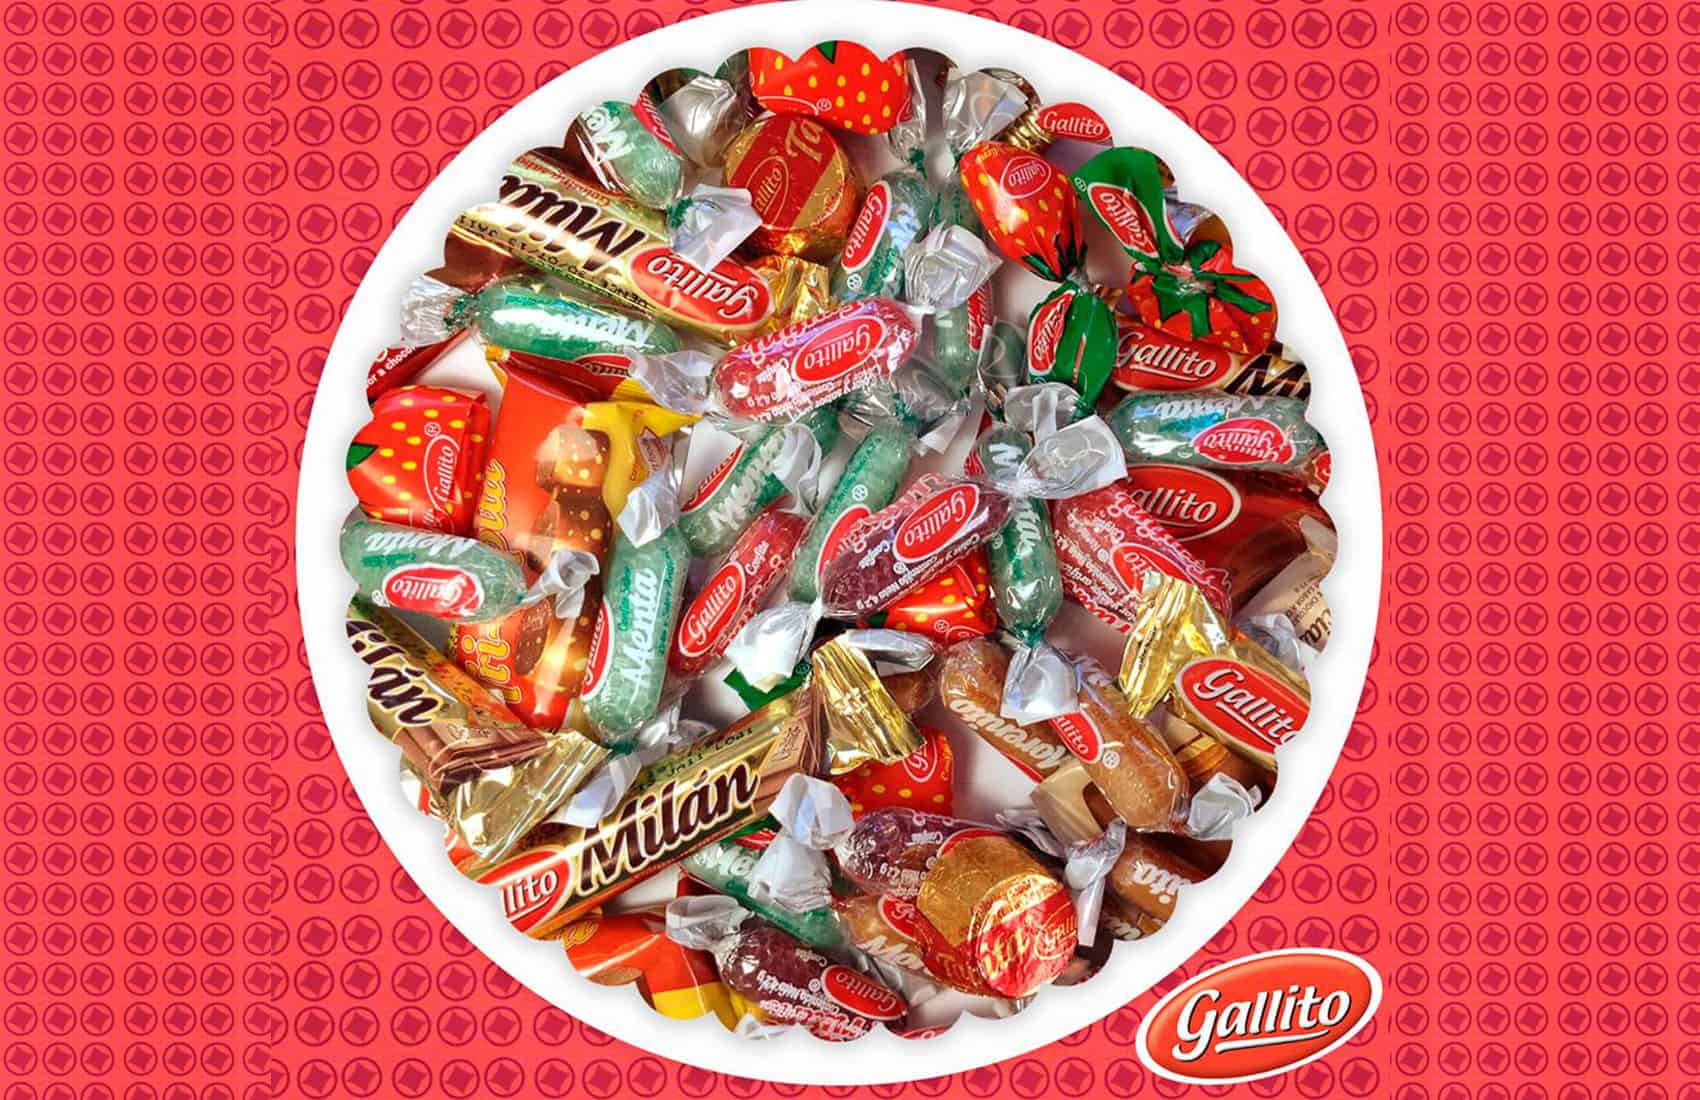 Gallito candies and chocolates